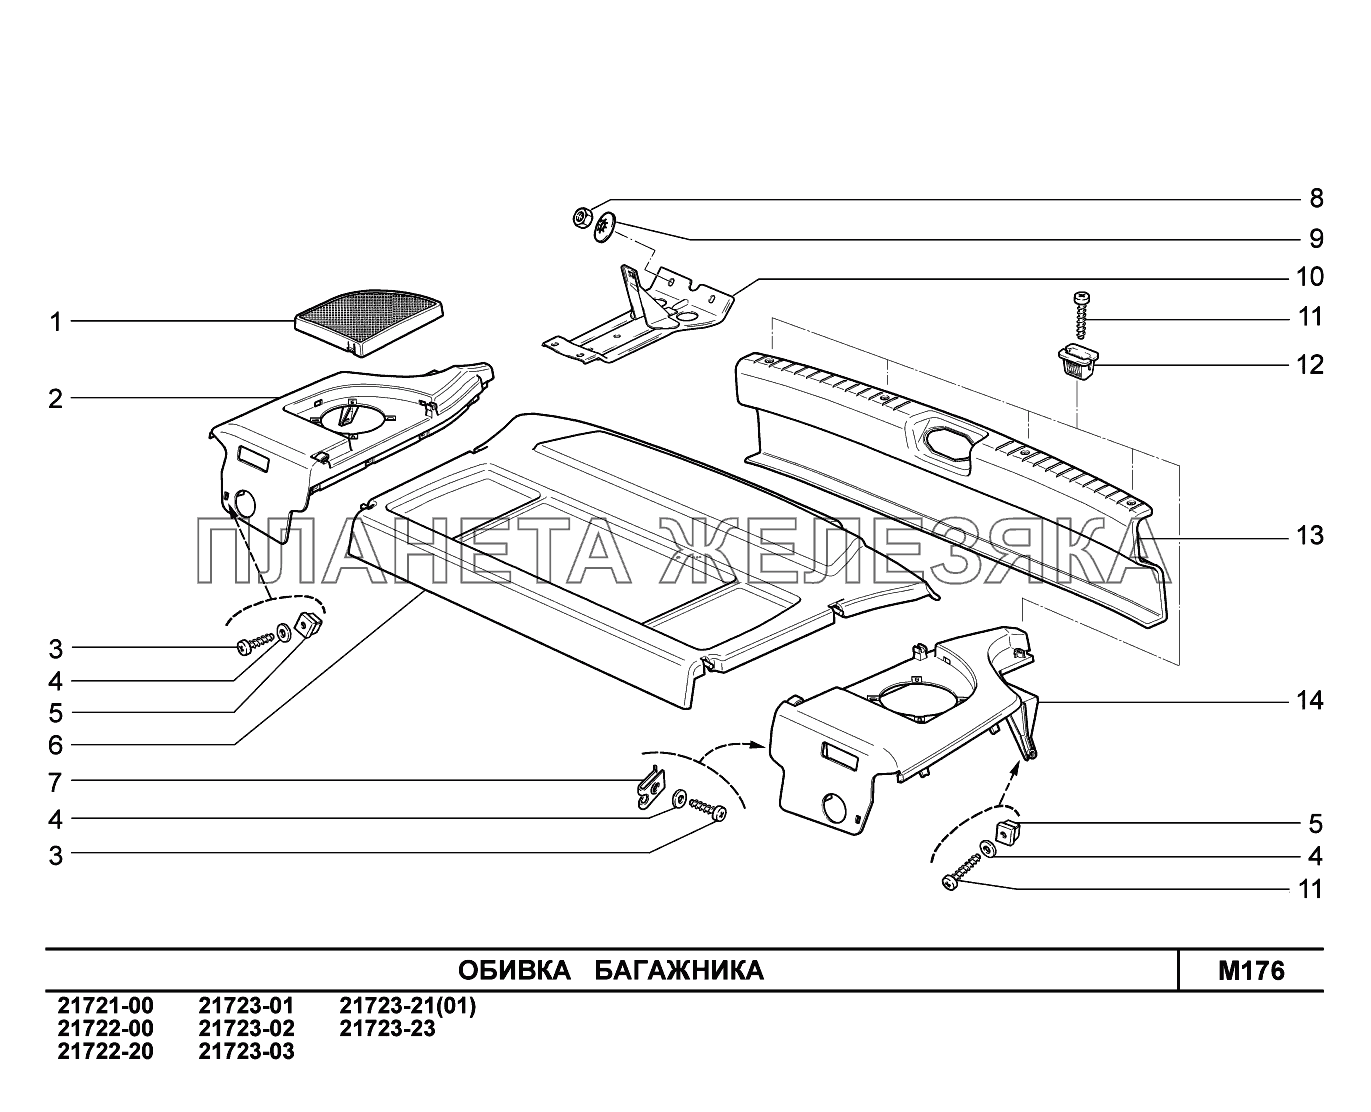 M176. Обивка багажника ВАЗ-2170 